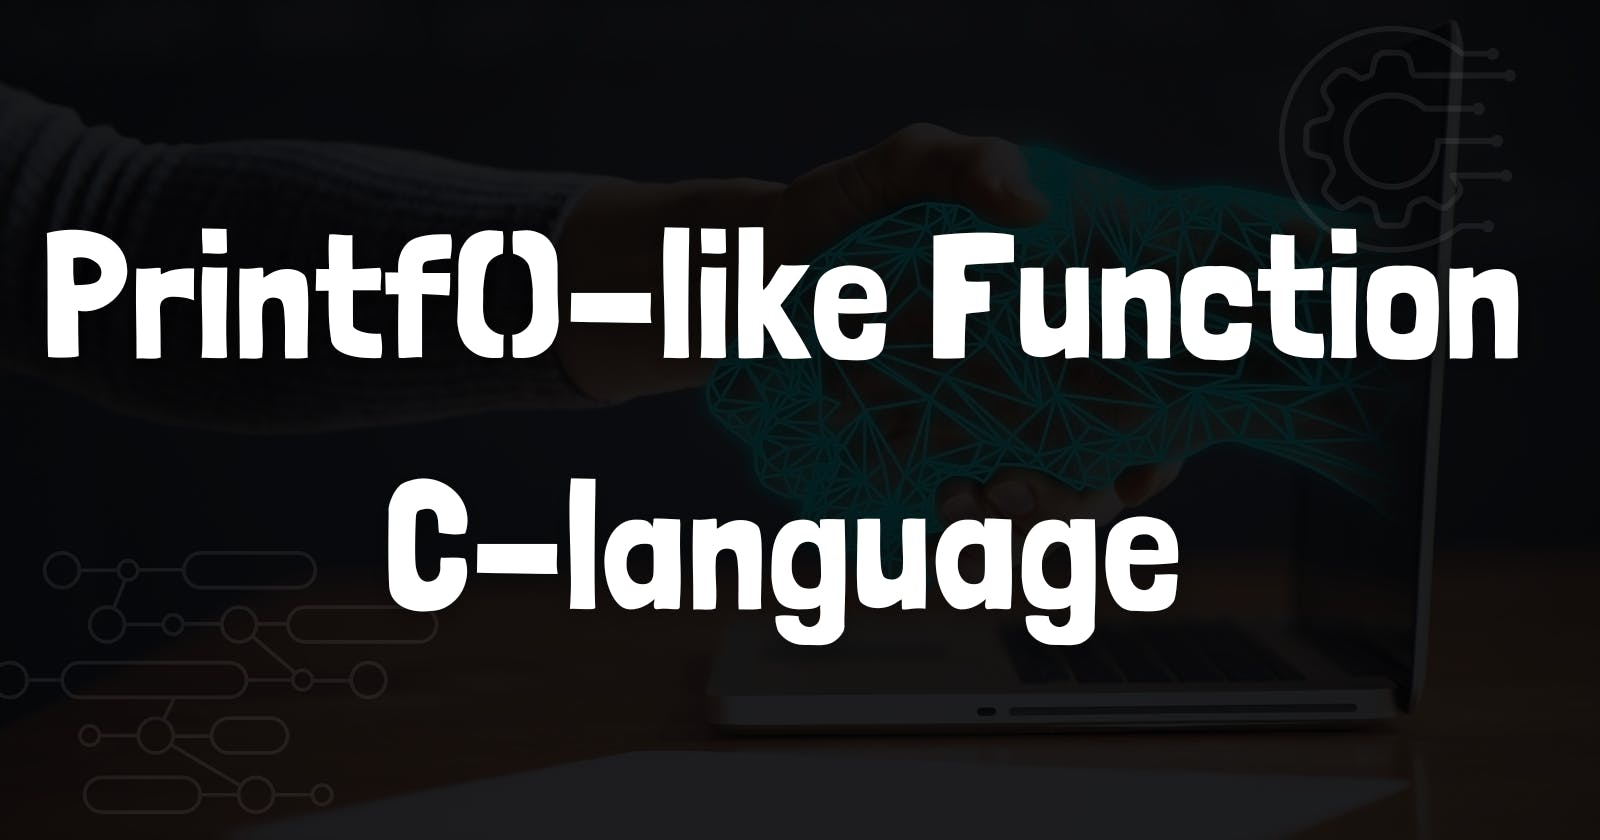 A printf() - like function